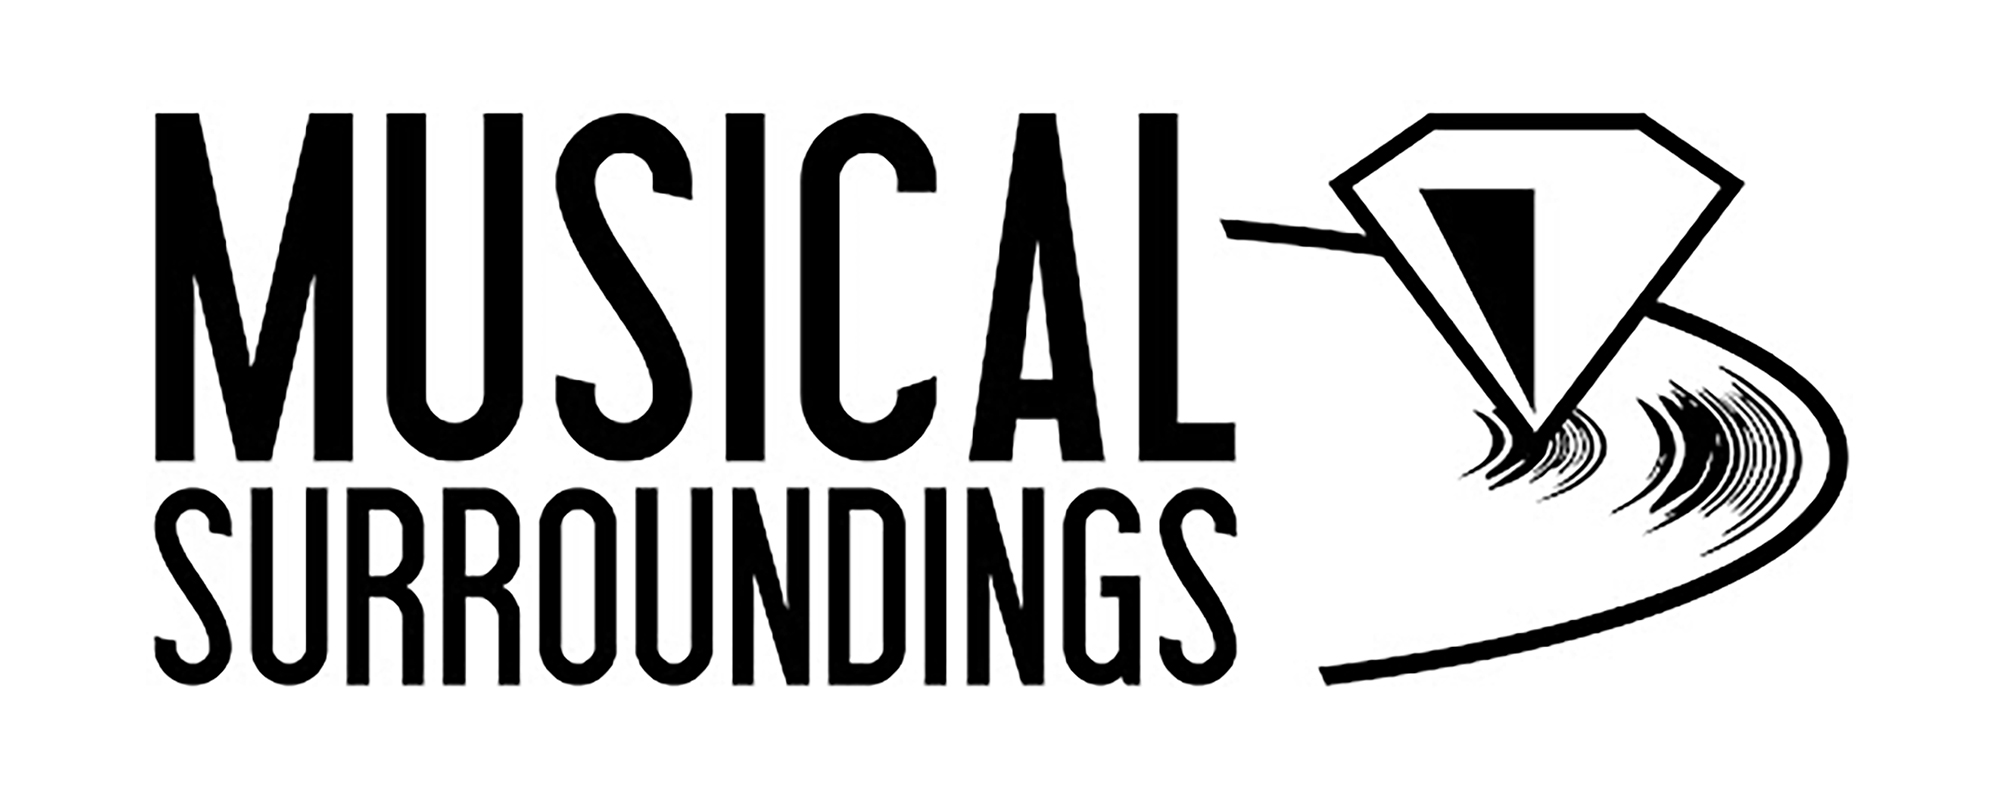 Musical Surroundings Banner 1 - Norman Audio